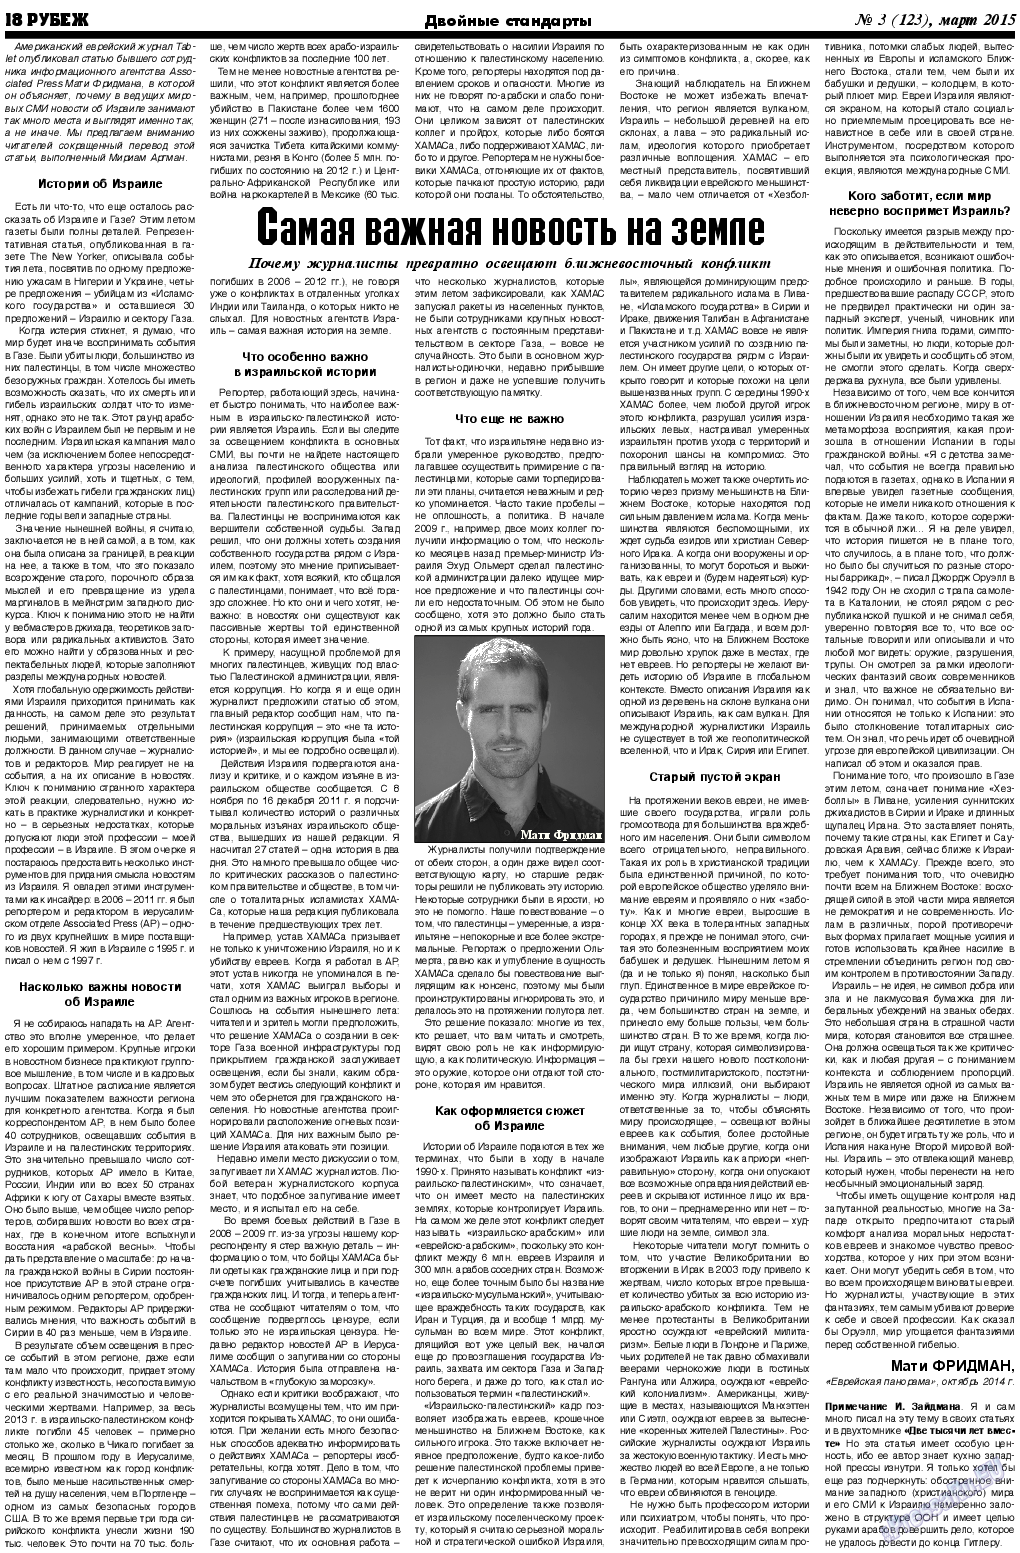 Рубеж, газета. 2015 №3 стр.18